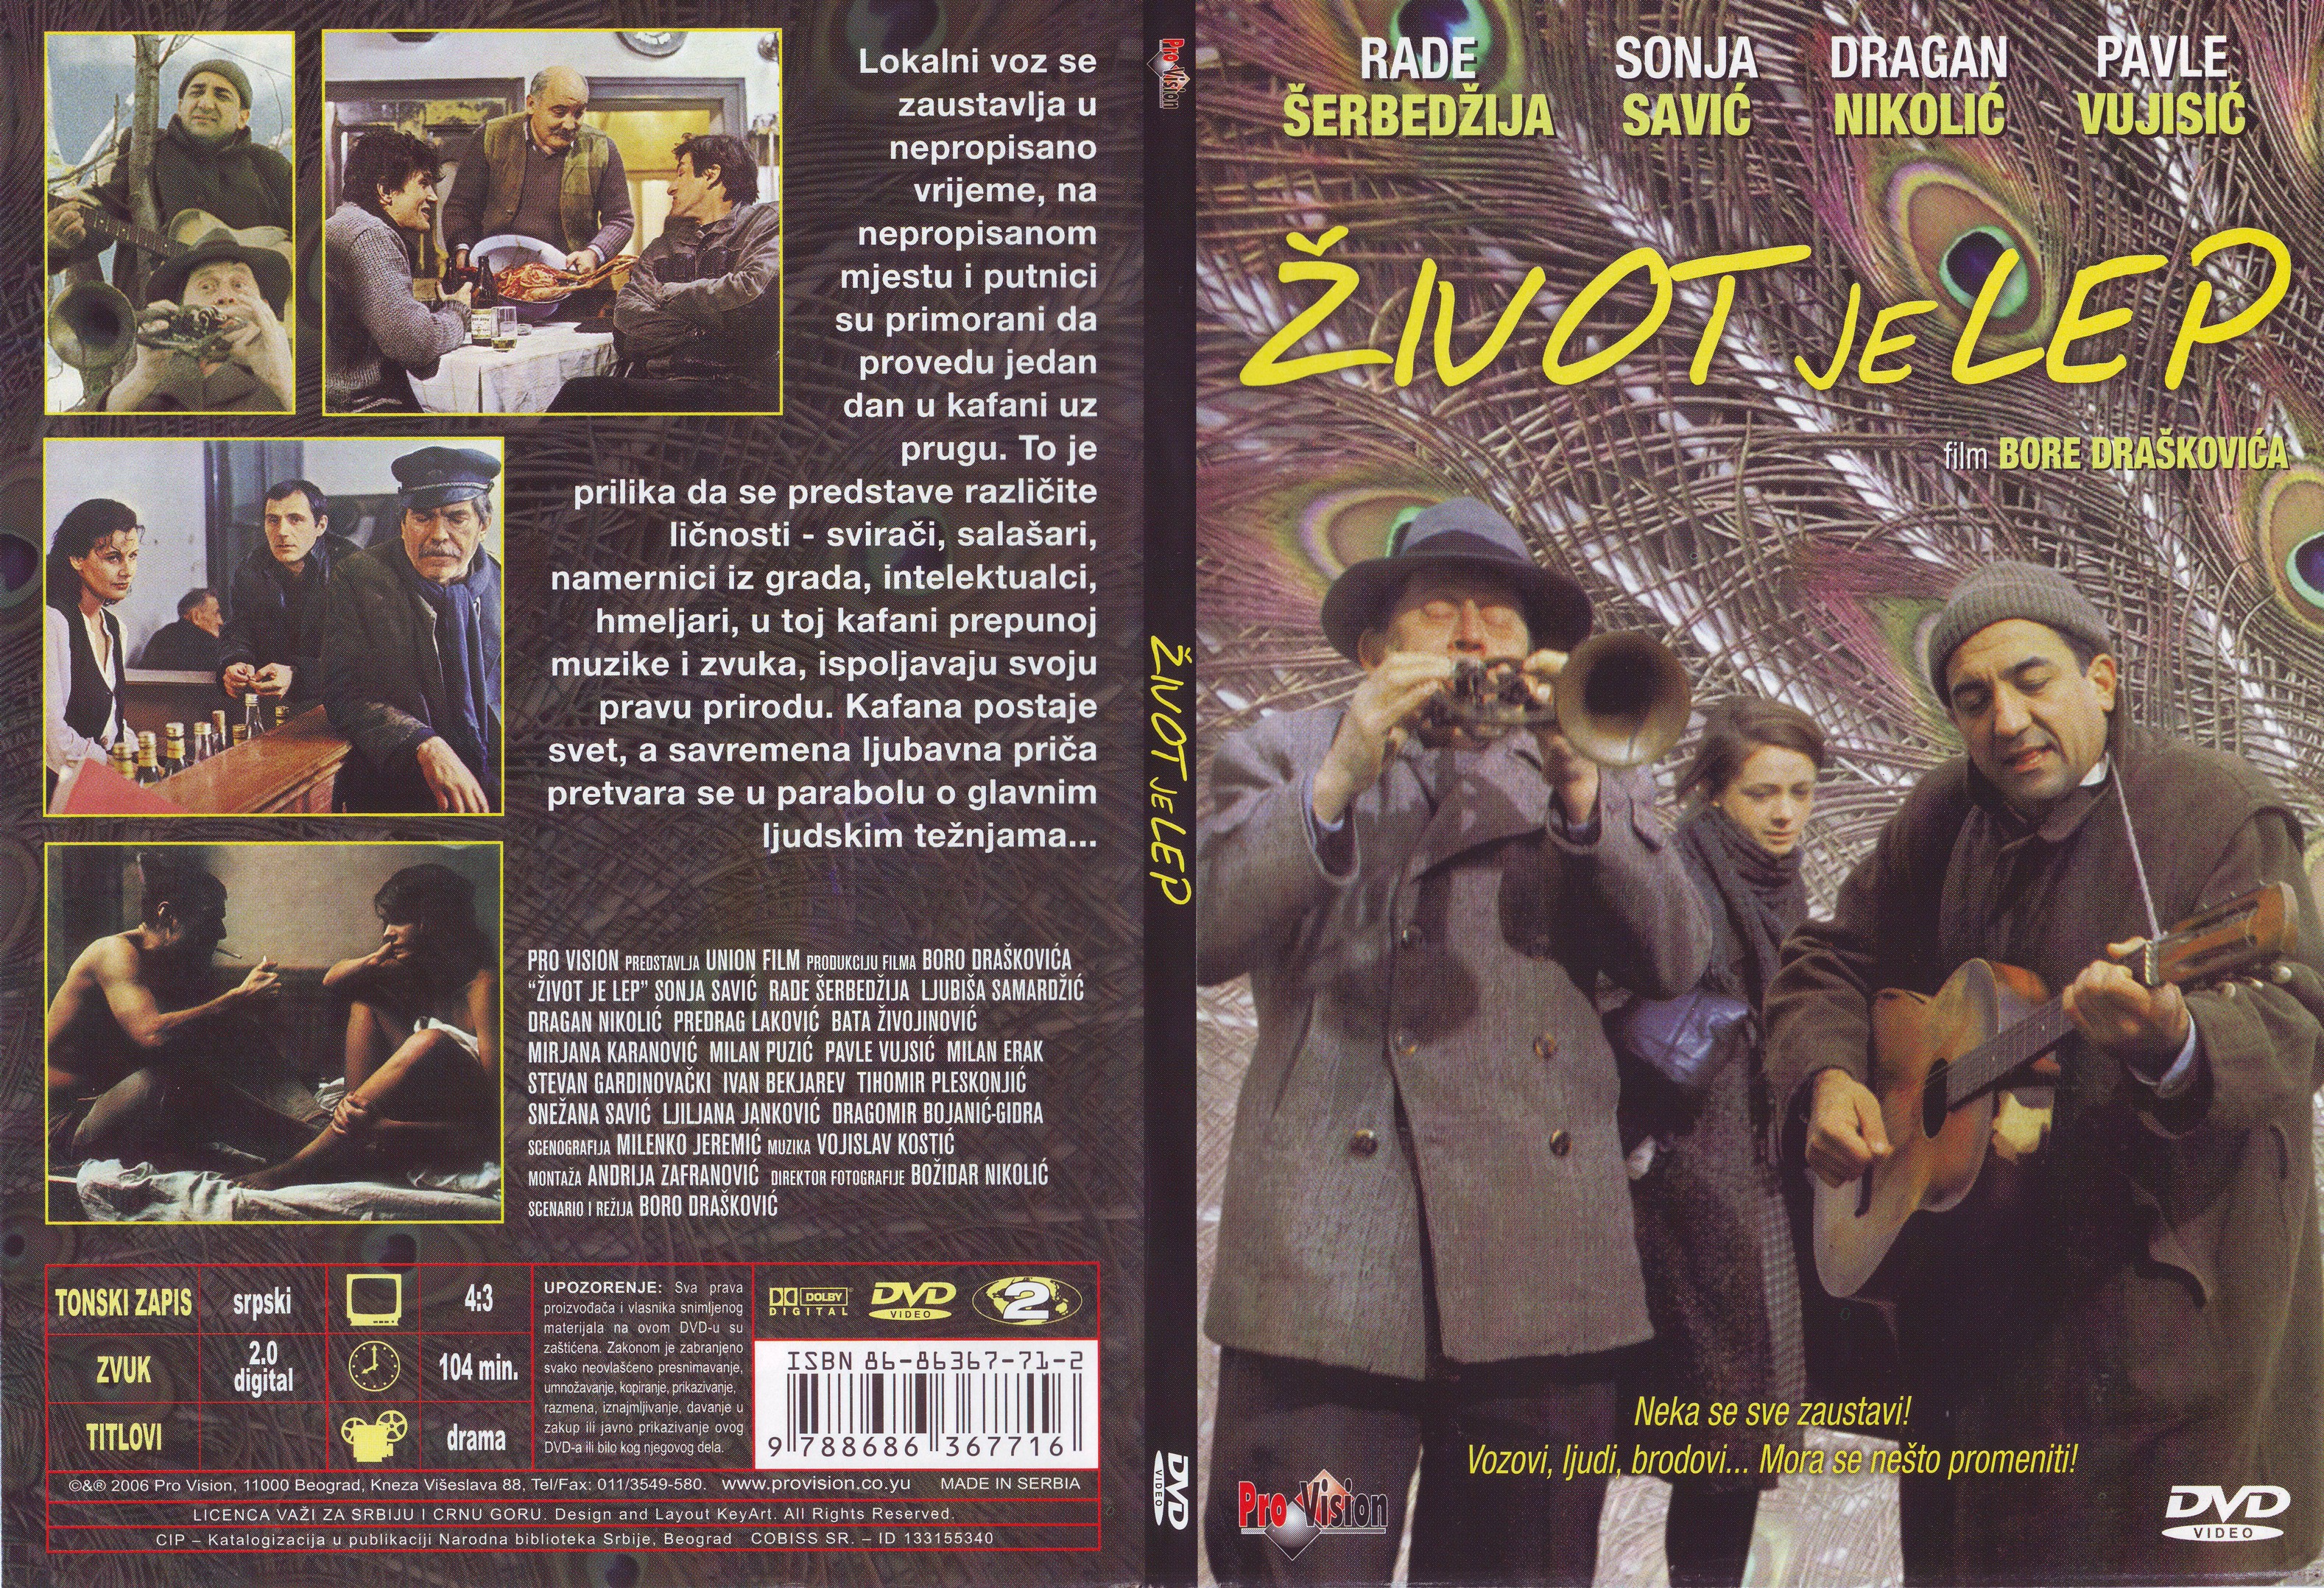 Click to view full size image -  DVD Cover - Z - DVD - ZIVOT JE LEP - DVD - ZIVOT JE LEP.jpg